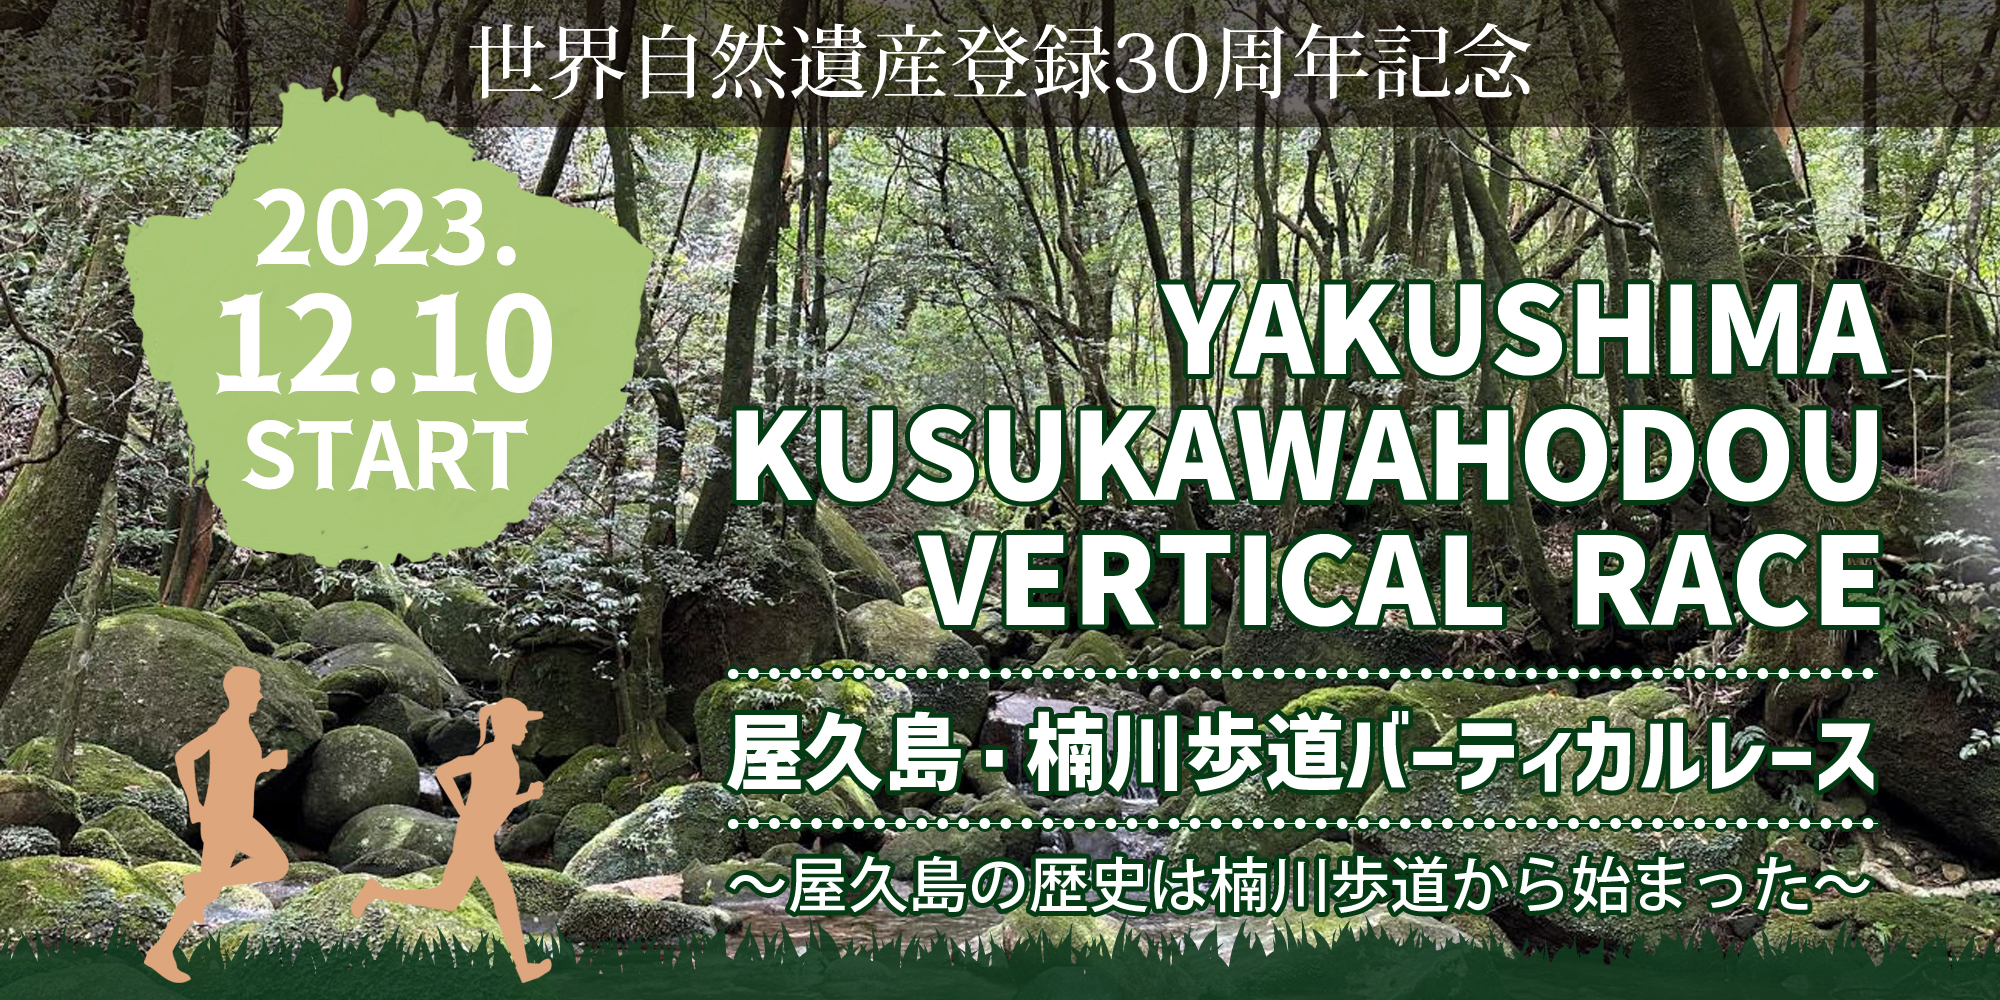 【ENGLISH】2023.12.10 START YAKUSHIMA, KUSUKAWA HODOU VERICAL RACE